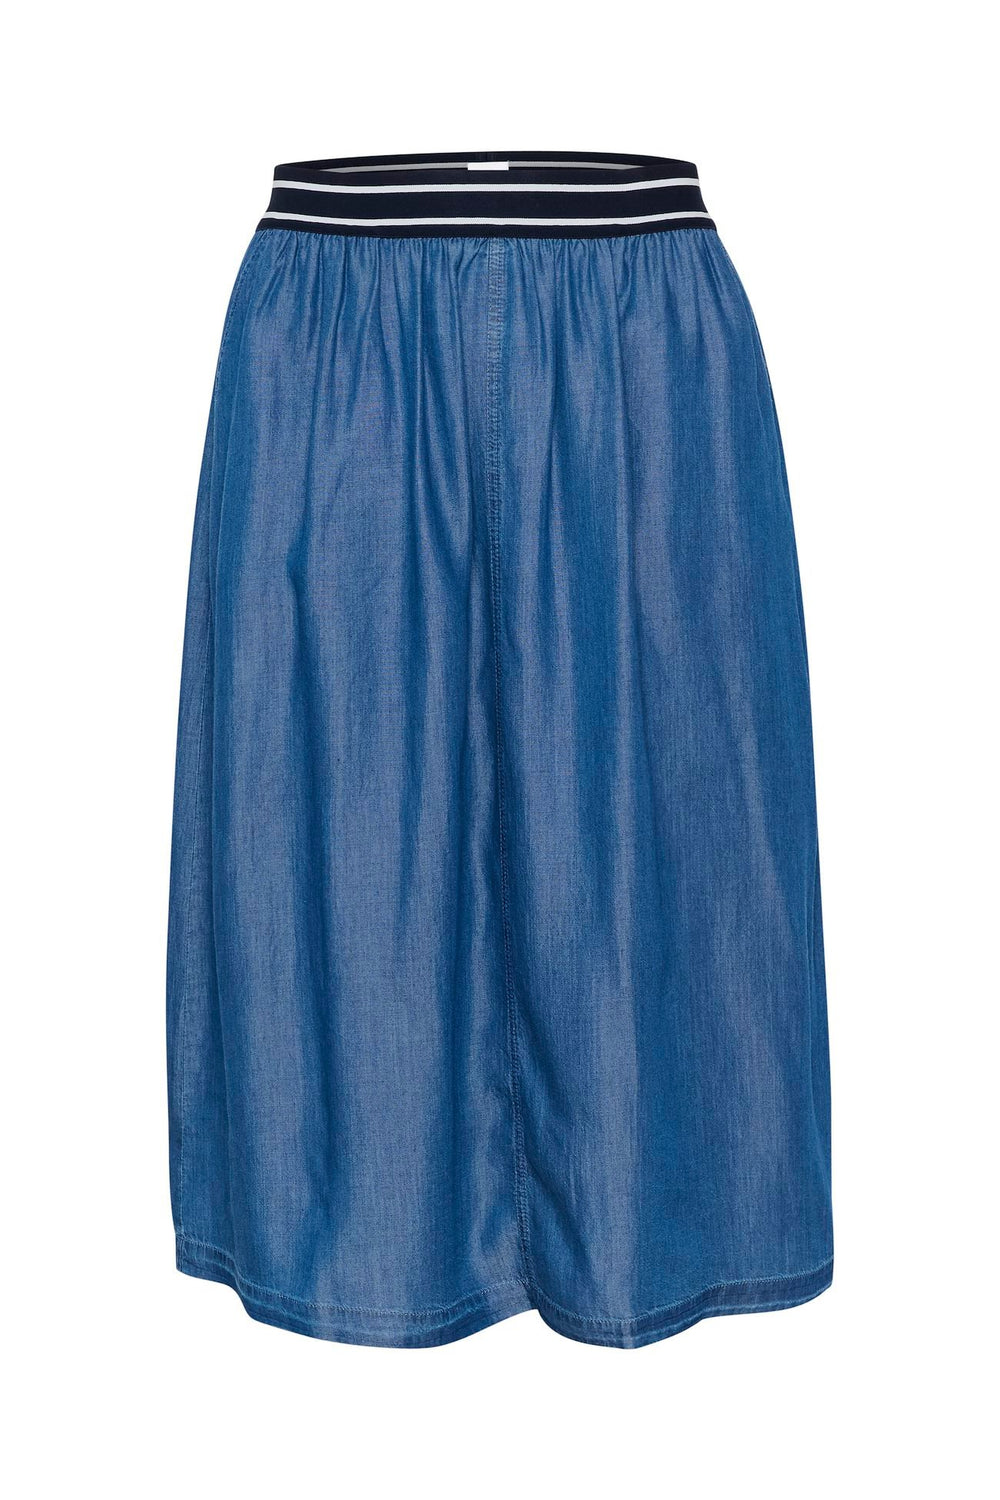 CHAMBRASZ Dutch Blue Skirt